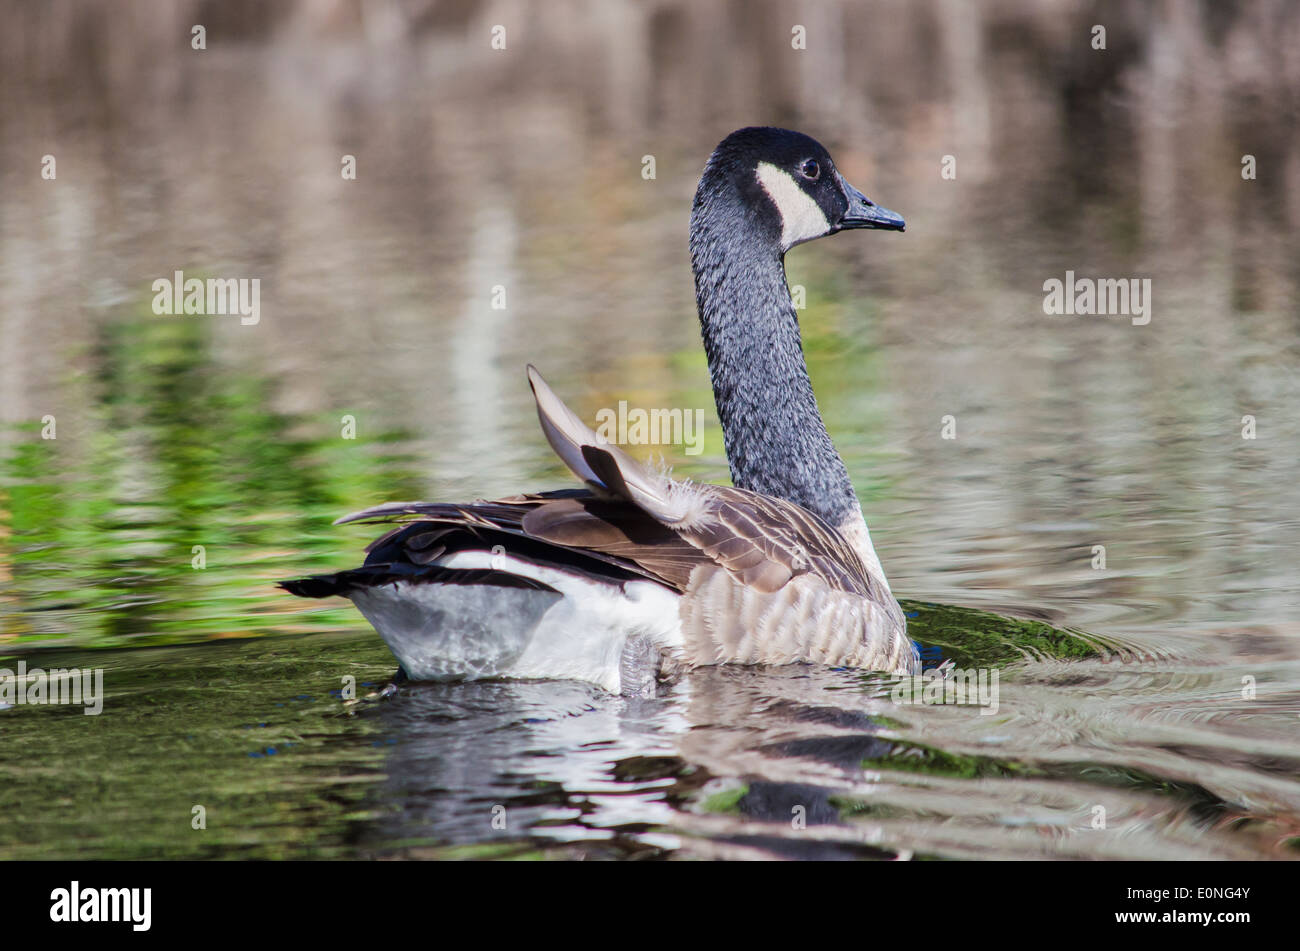 Canada goose swimming Stock Photo